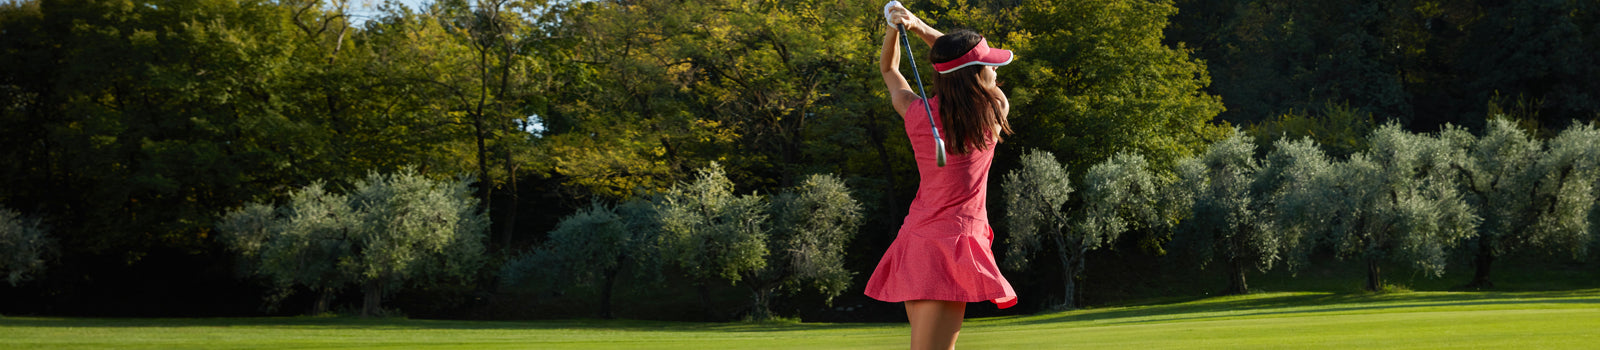 Chervo women's golf wear at GolfGarb